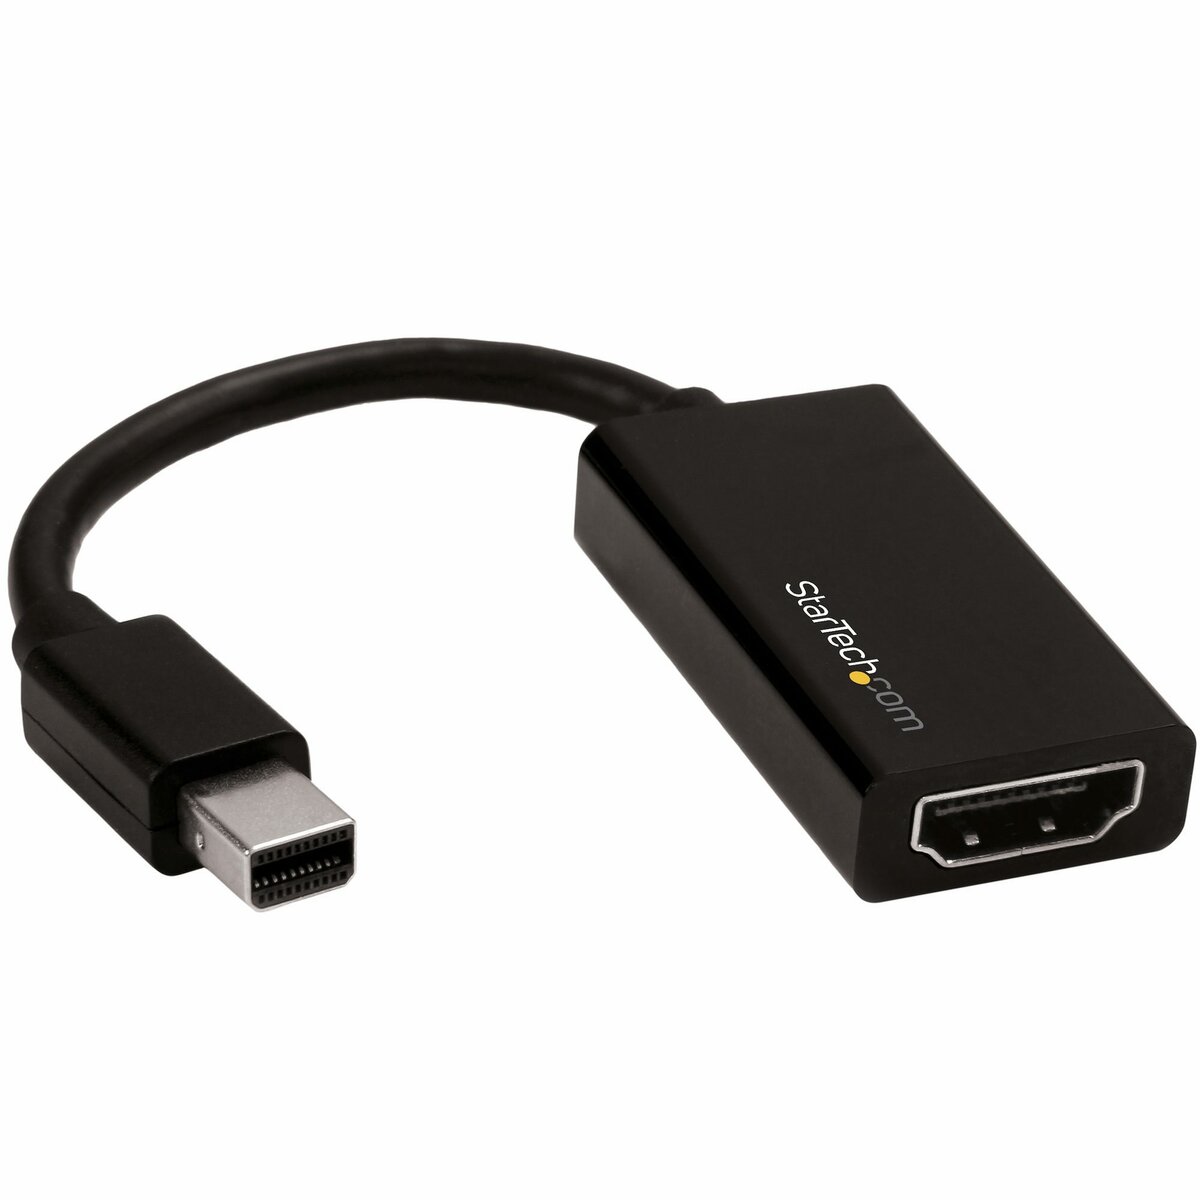 StarTech.com Mini DisplayPort to Adapter - 4K to HDMI Converter - UHD 4K 60Hz (MDP2HD4K60S) - converter